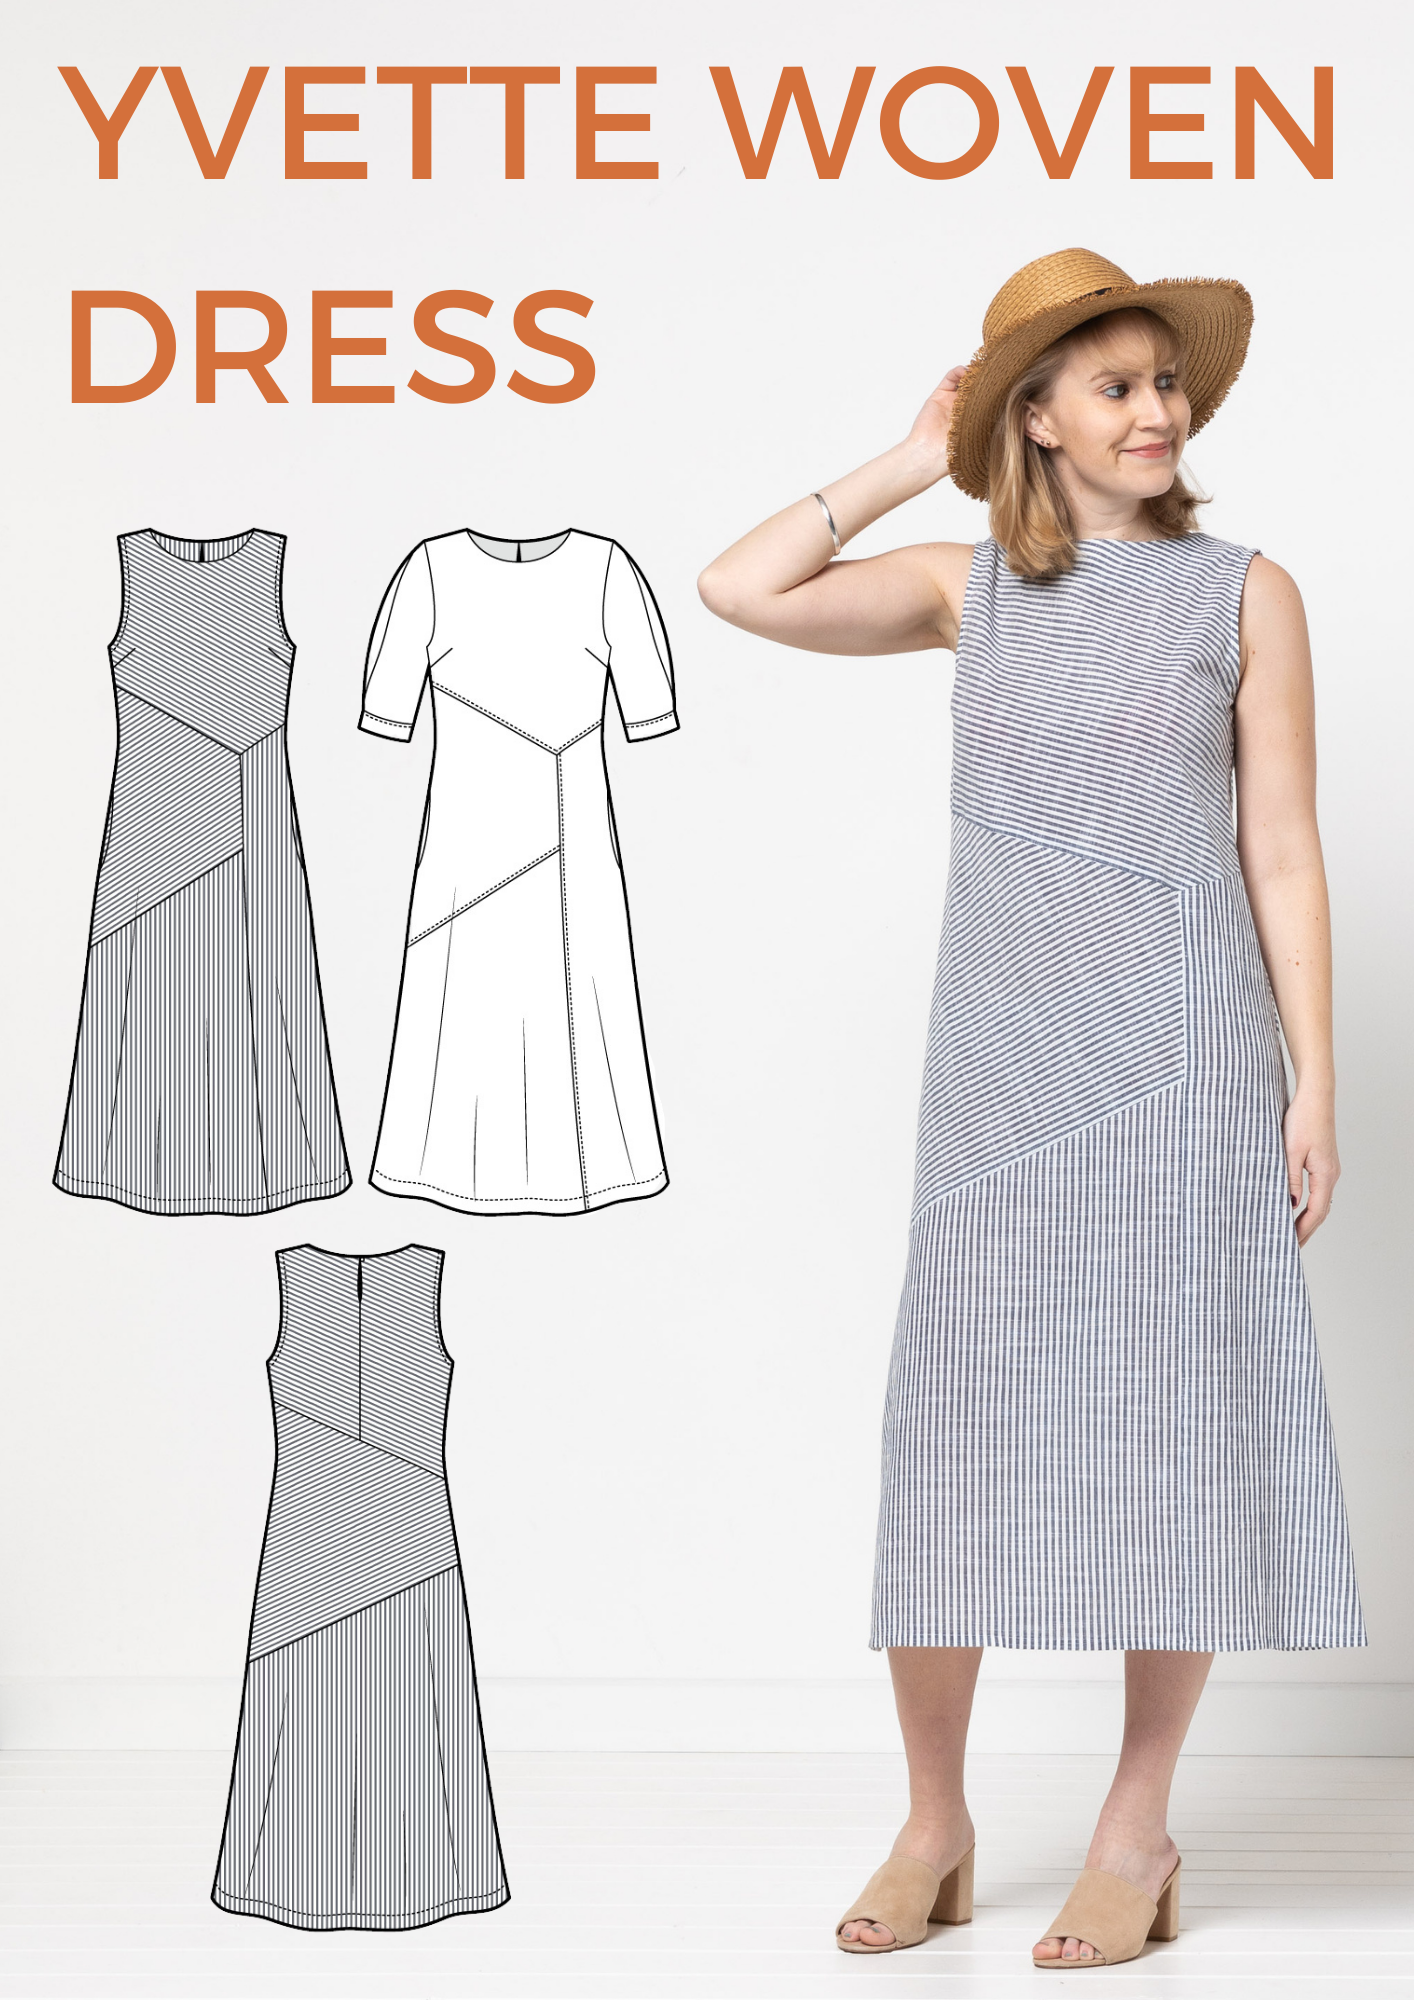 New Pattern - Yvette Woven Dress